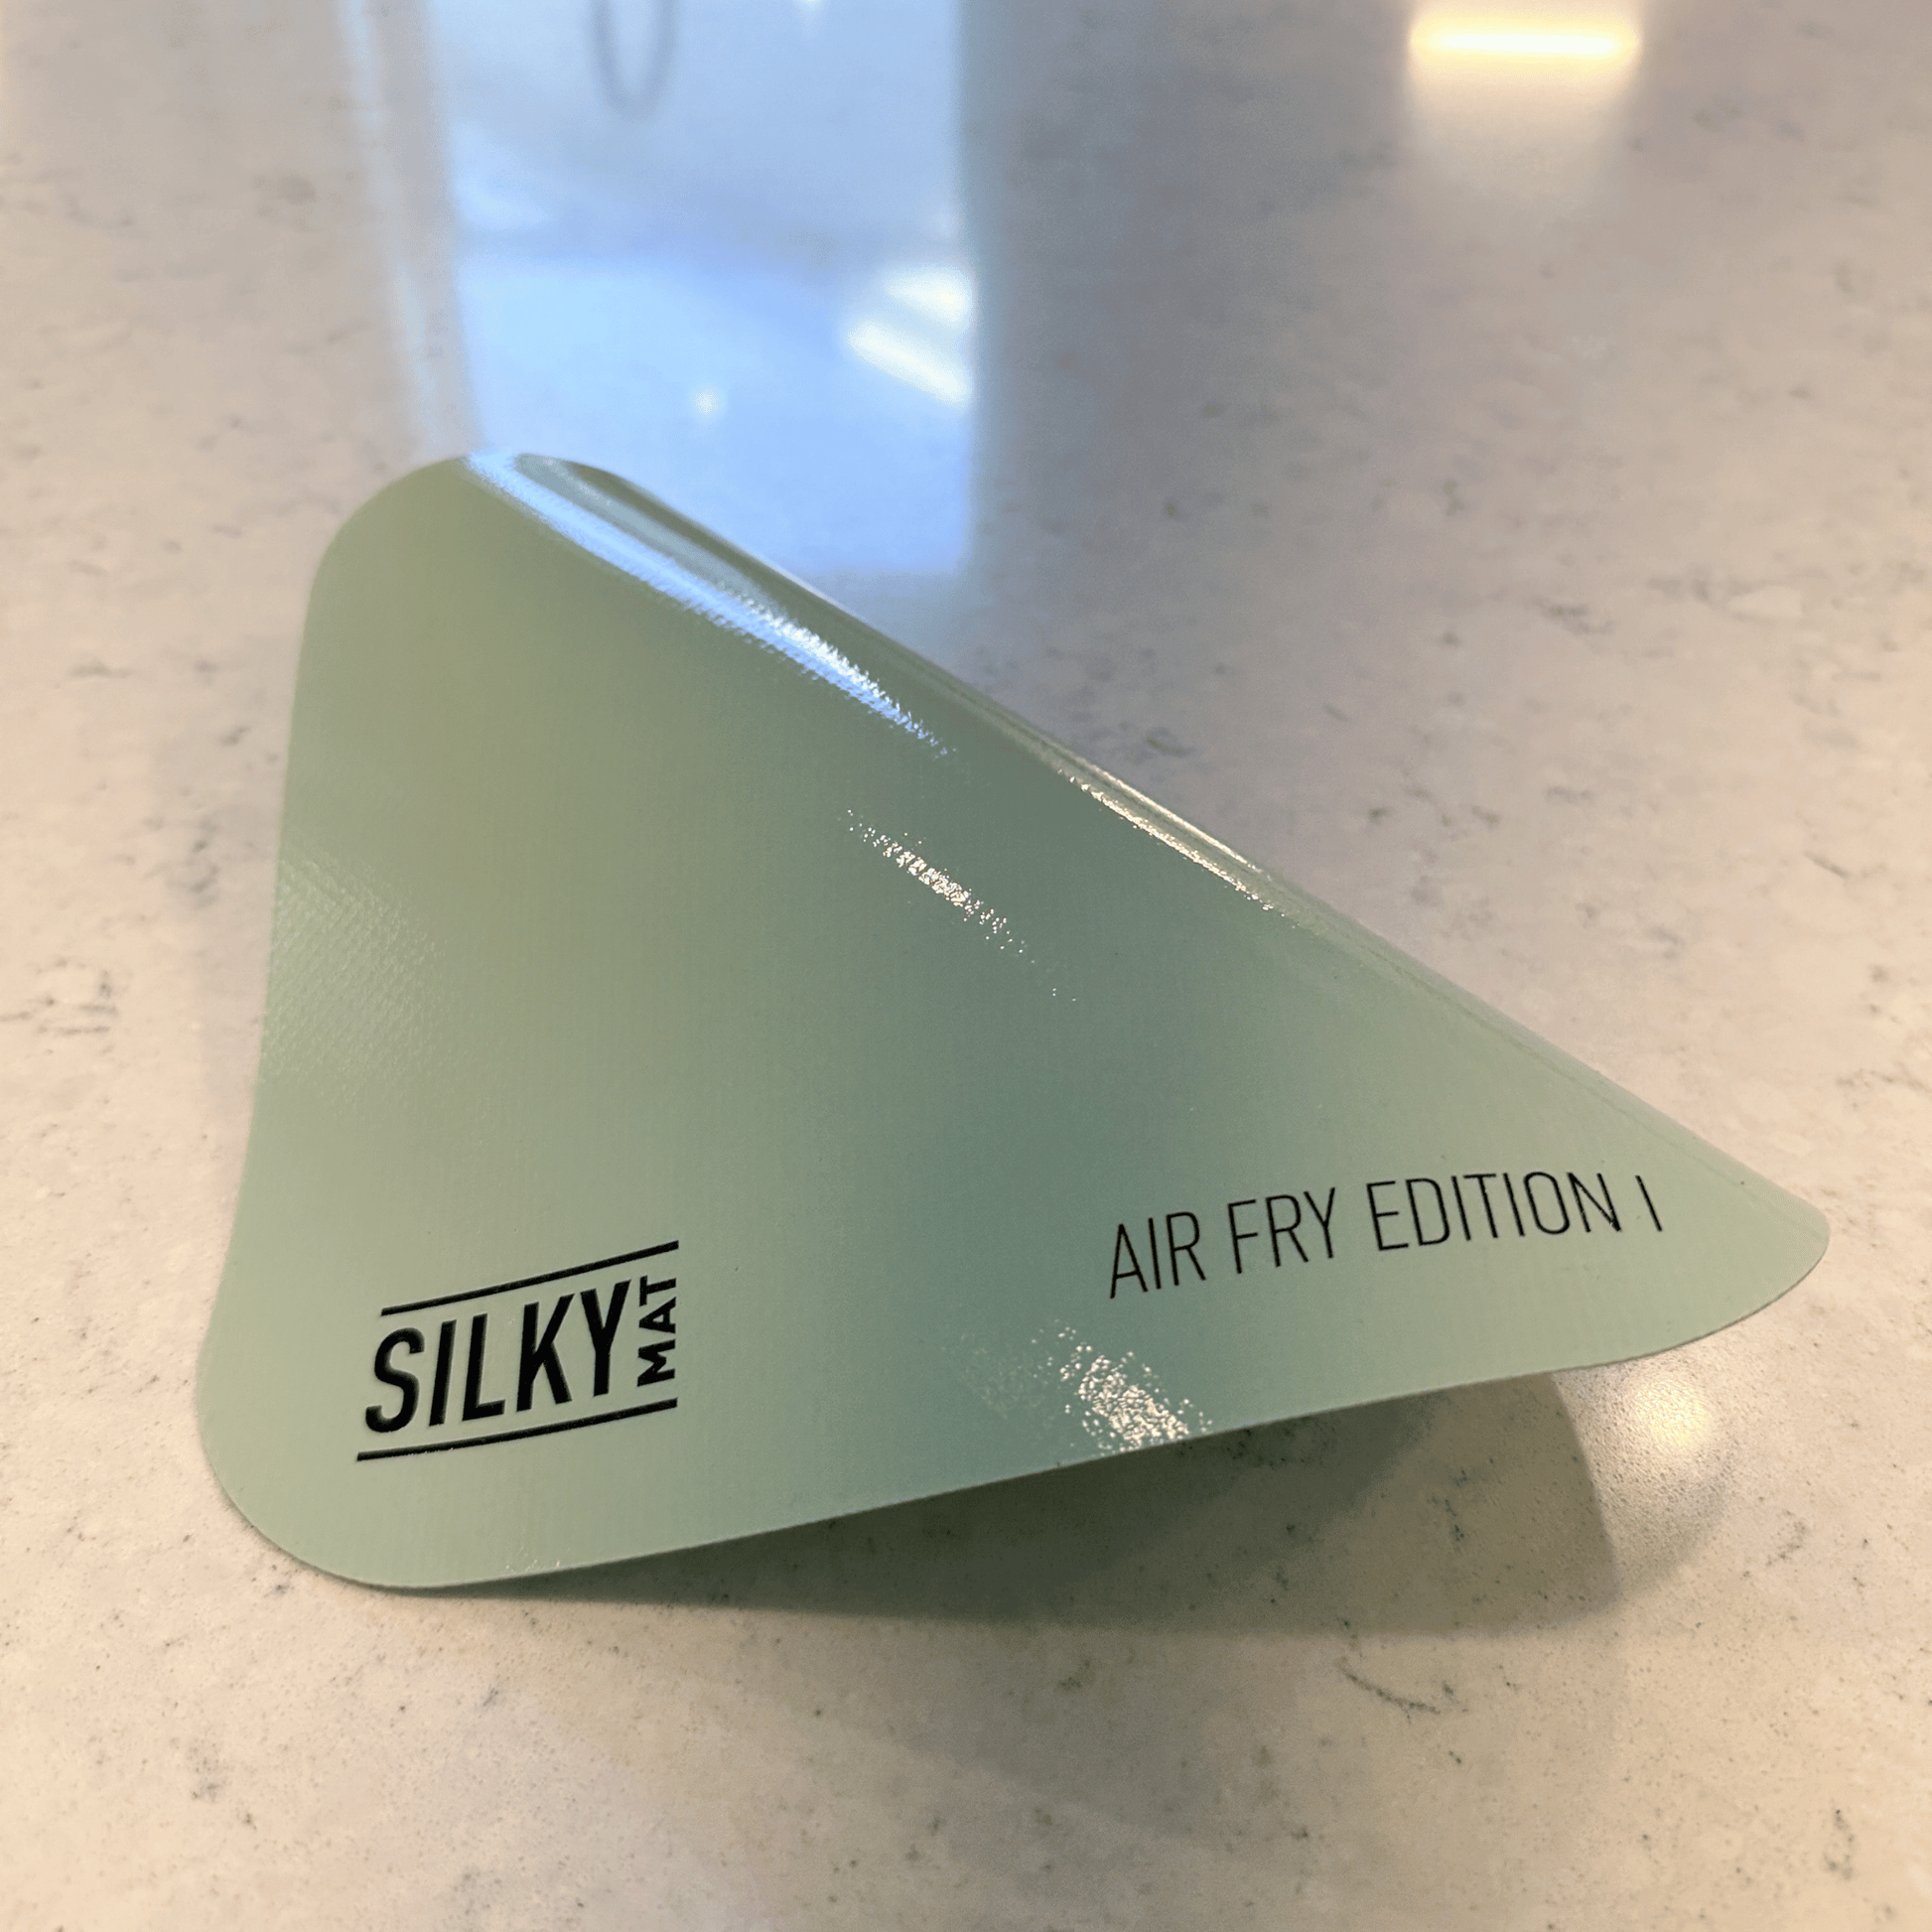 Air Fry Edition I – Silky Mat